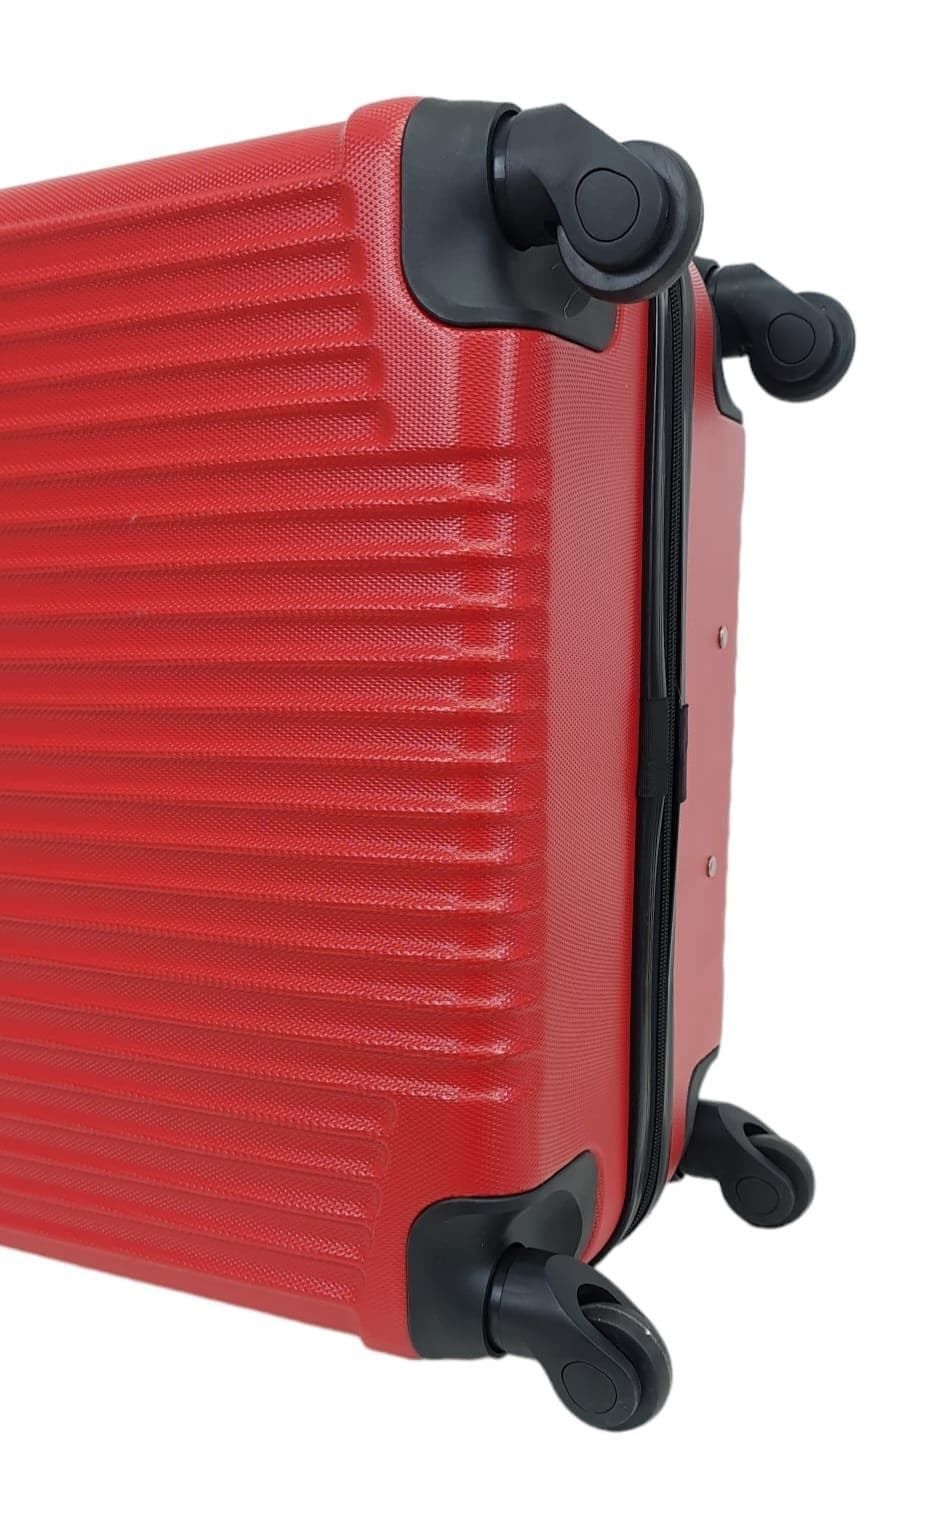 Maleta EXE Grande 75x44x29cms Ligera Barata Material ABS color Rojo - Imagen 7